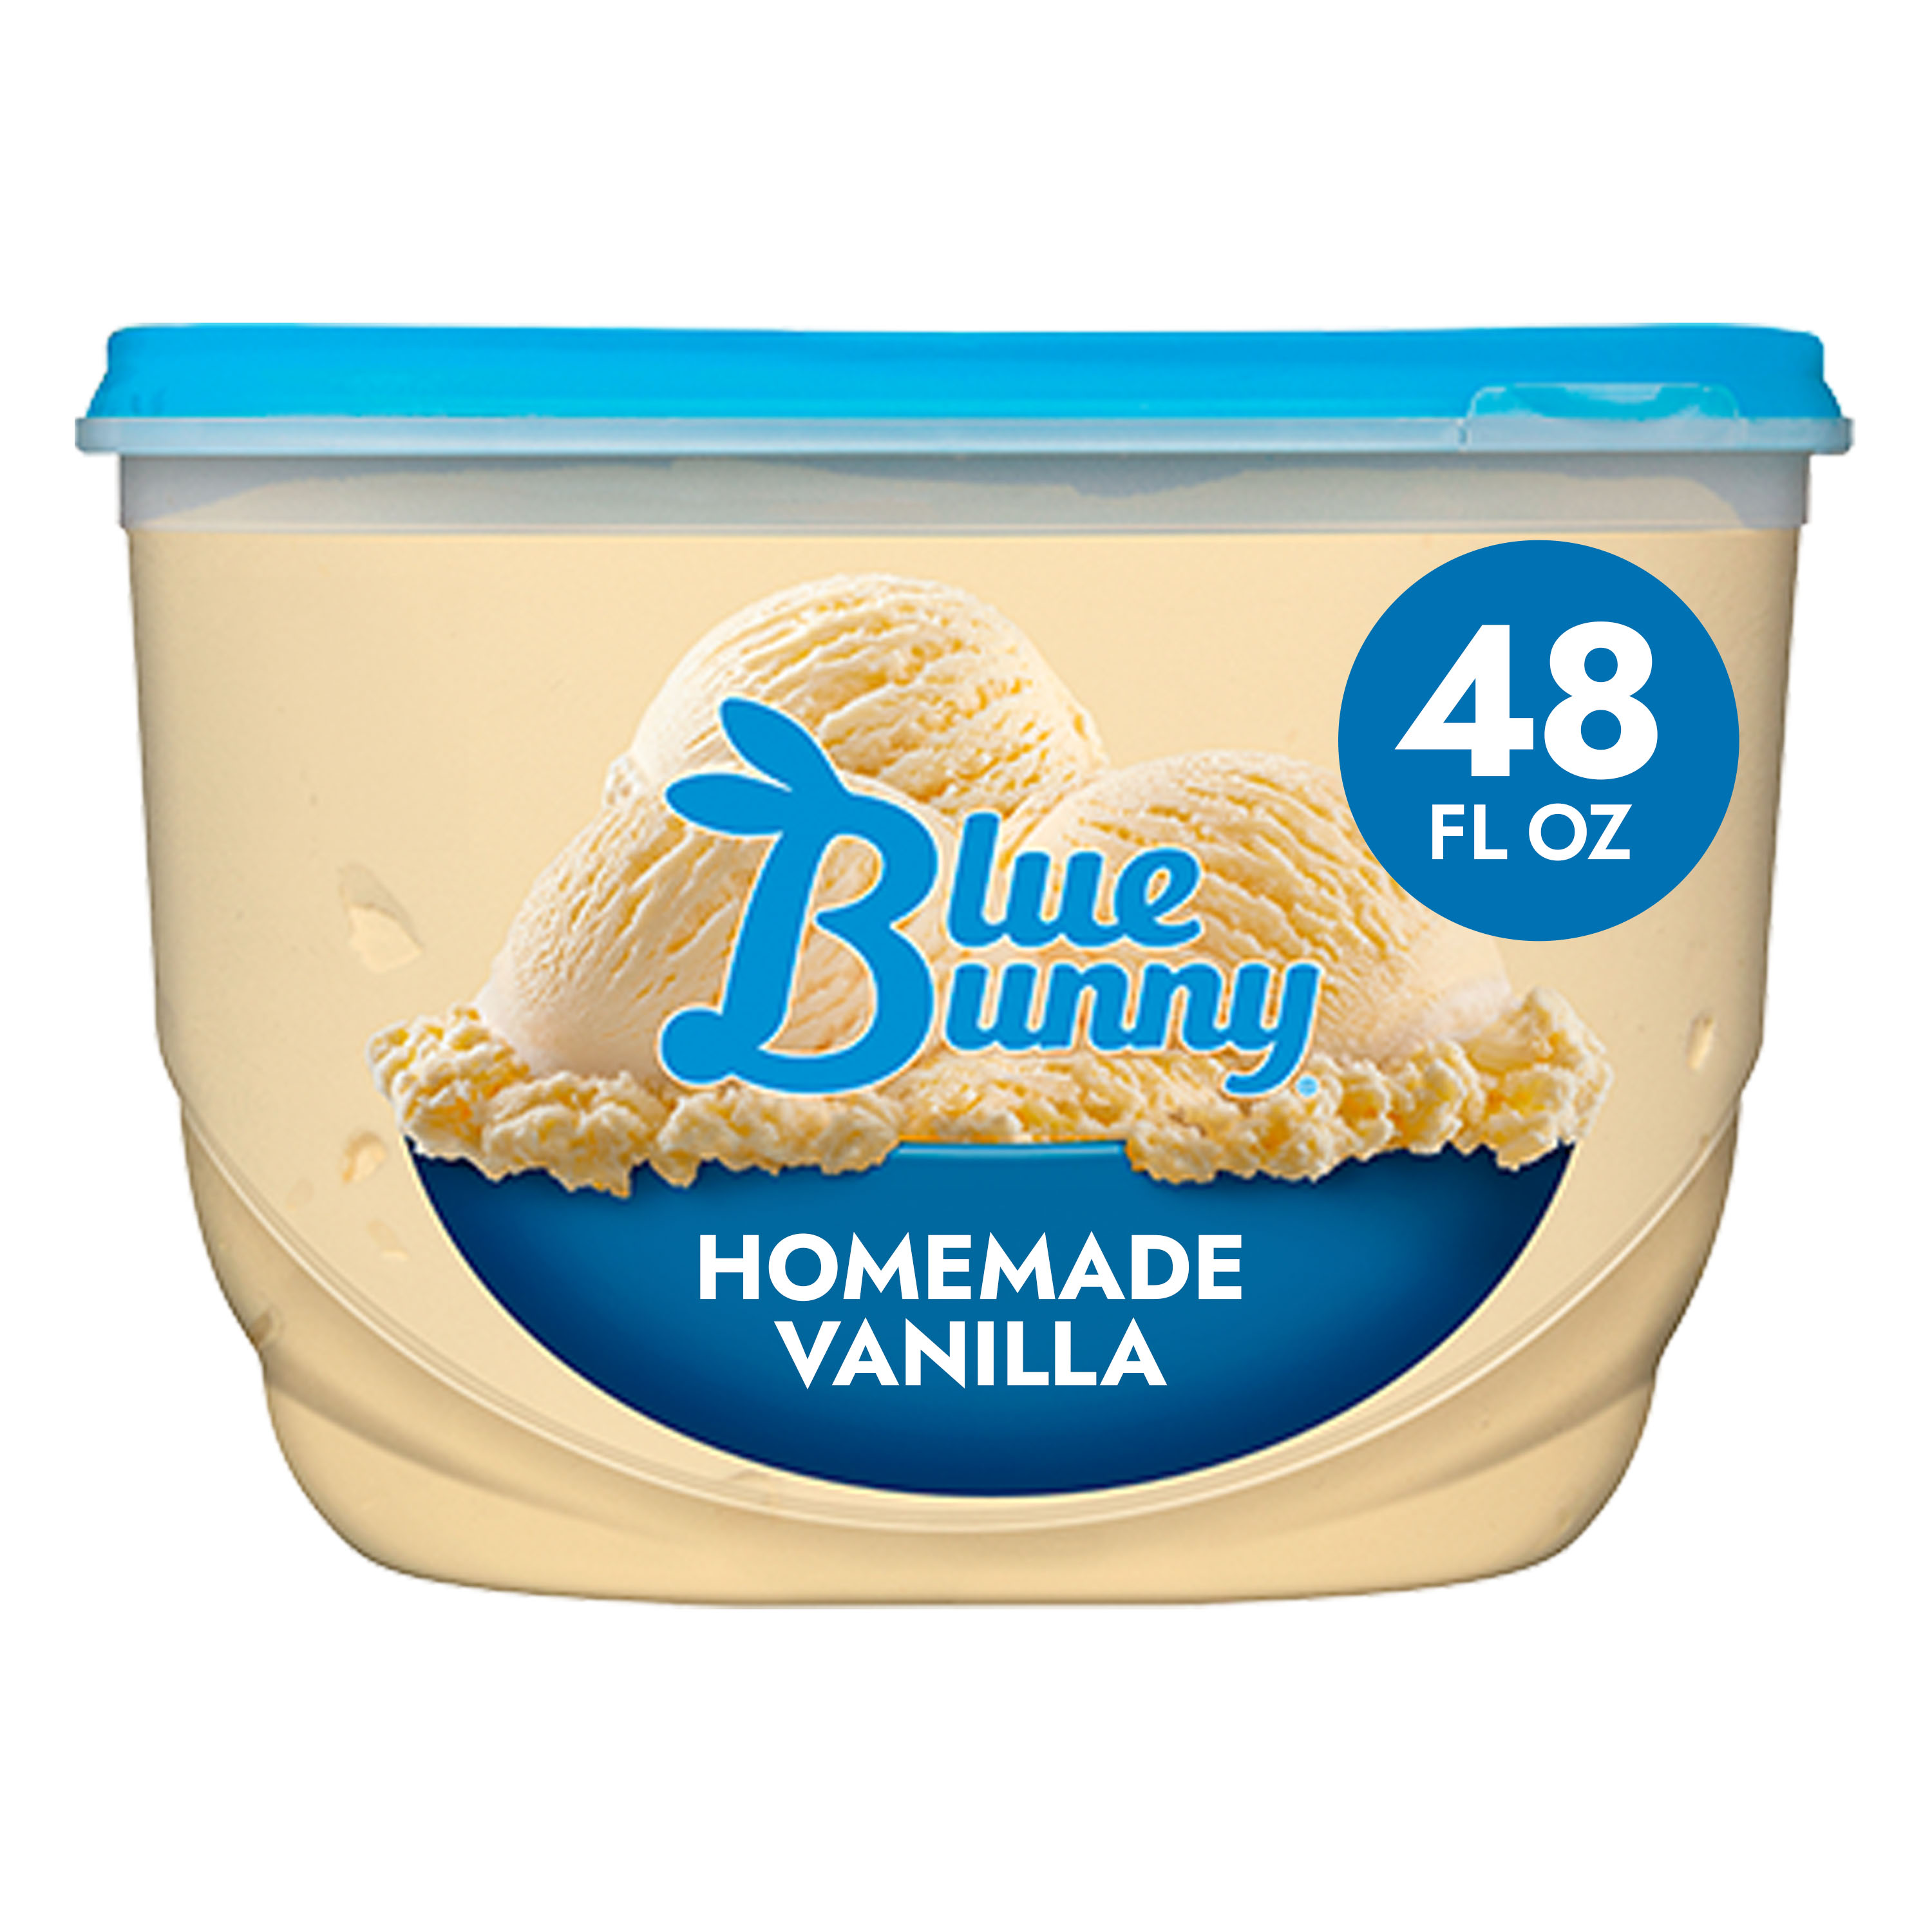 Blue Bunny Homemade Vanilla Frozen Dessert, 48 fl oz - image 2 of 9